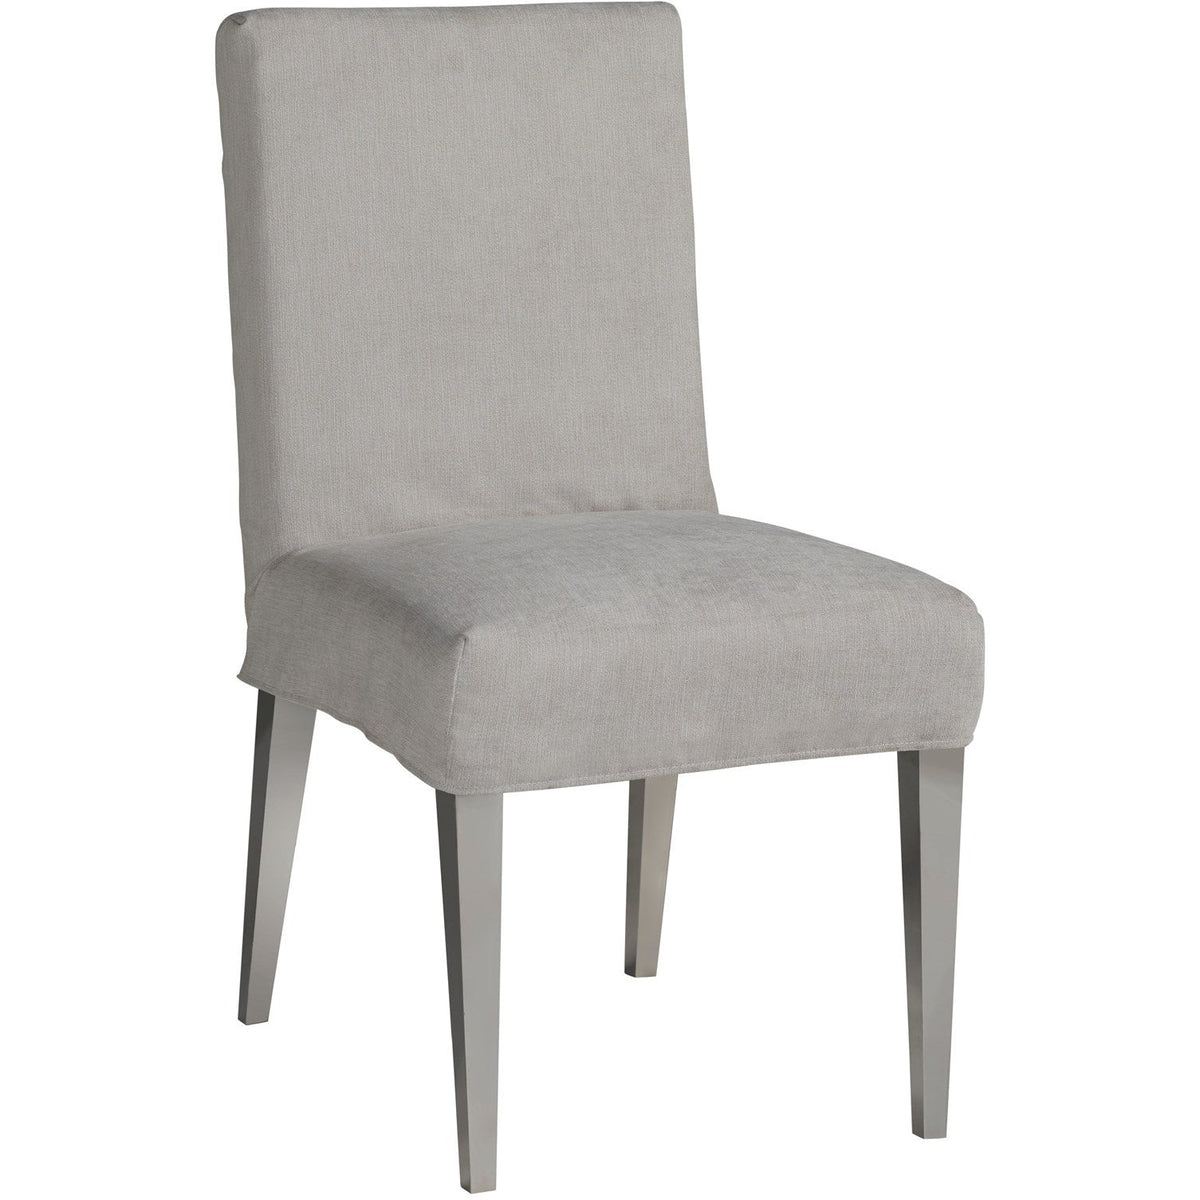 Jett Slip Cover Side Chair - Be Bold Furniture